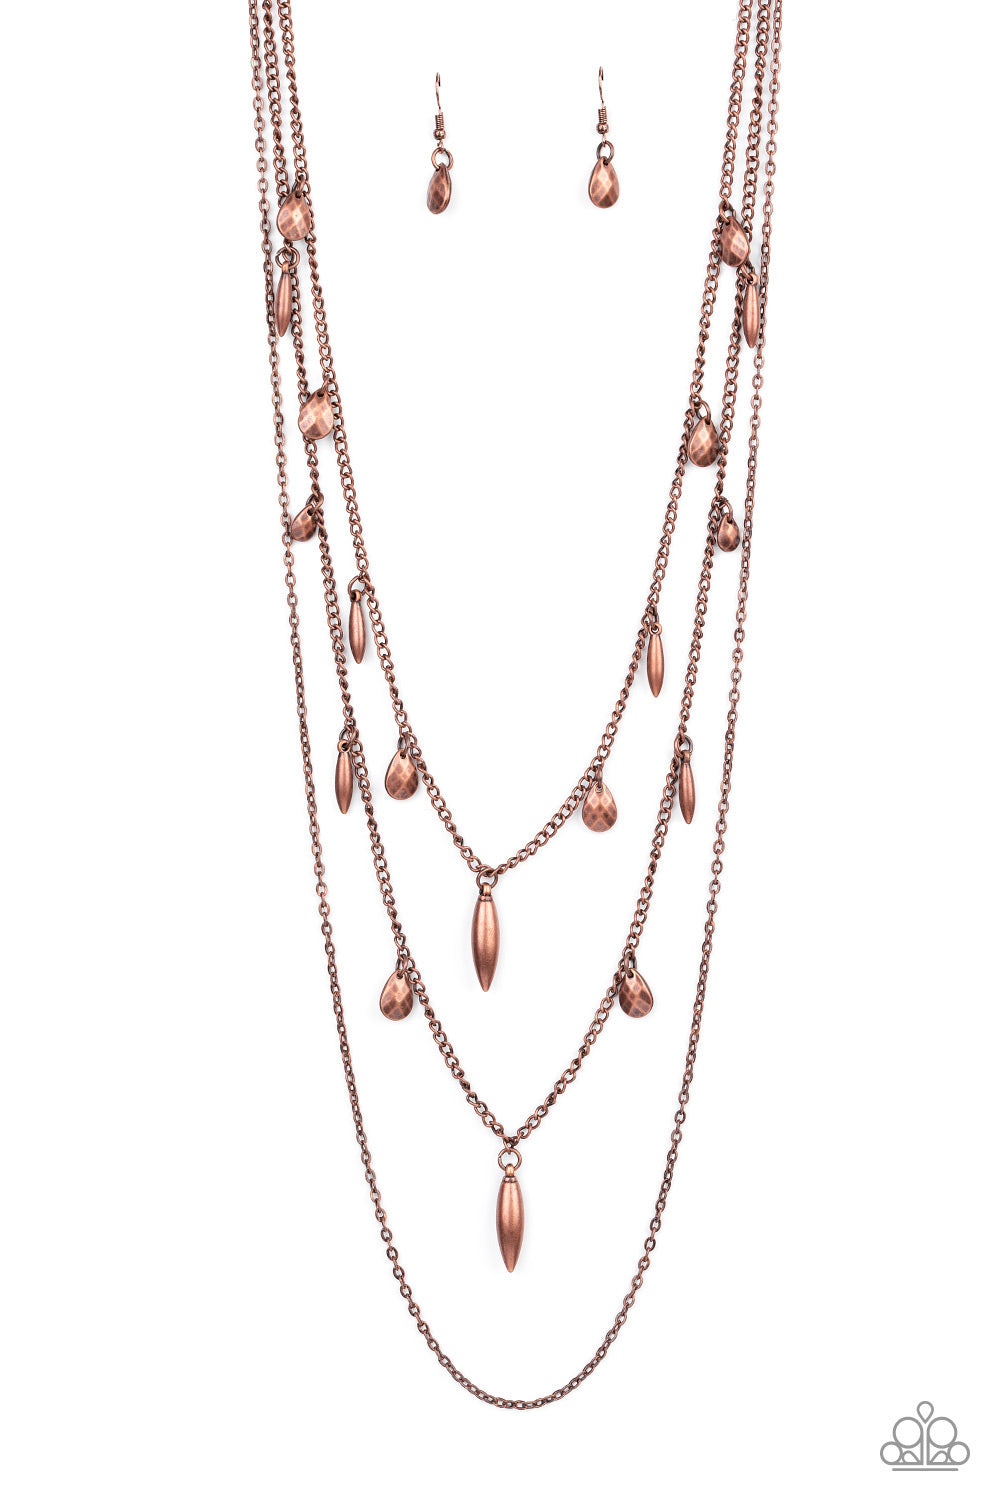 Bravo Bravado Paparazzi Accessories Necklace with Earrings - Copper